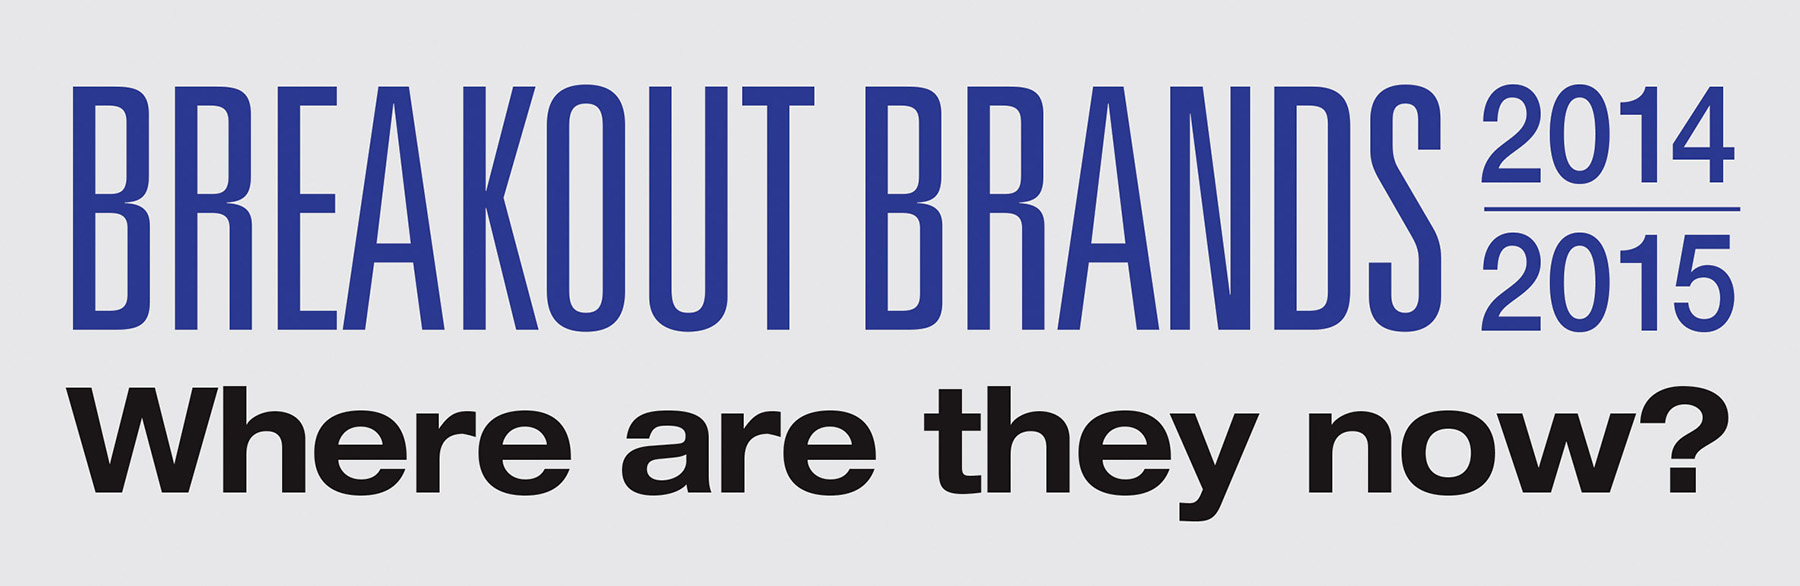 Breakout Brands 2014 2015